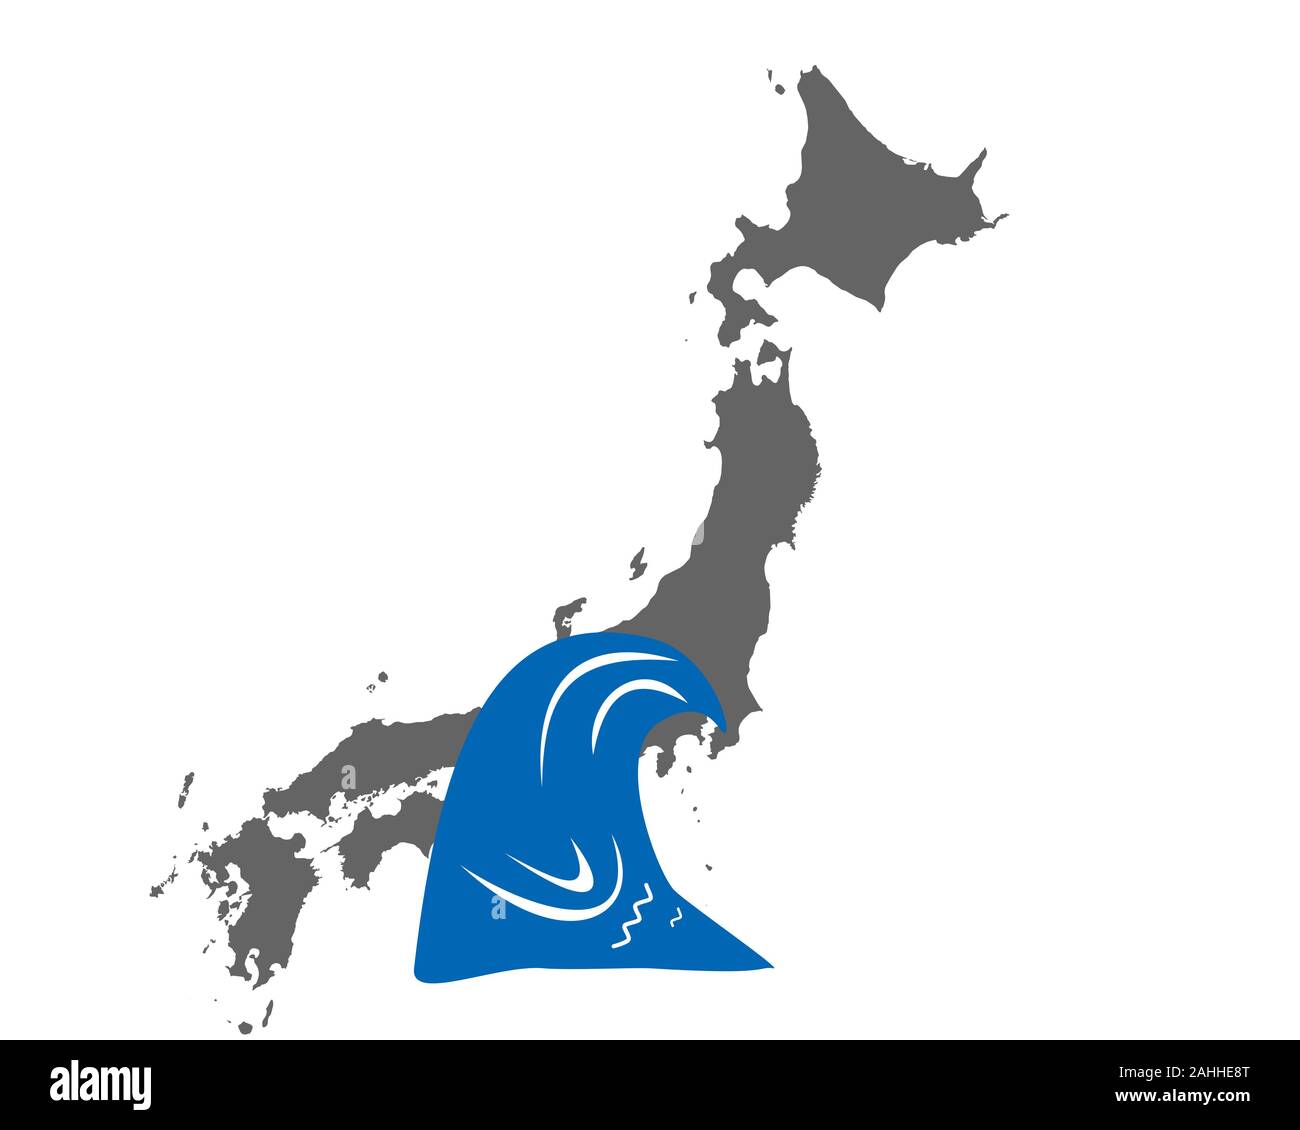 Map of Japan and tsunami symbol Stock Photo